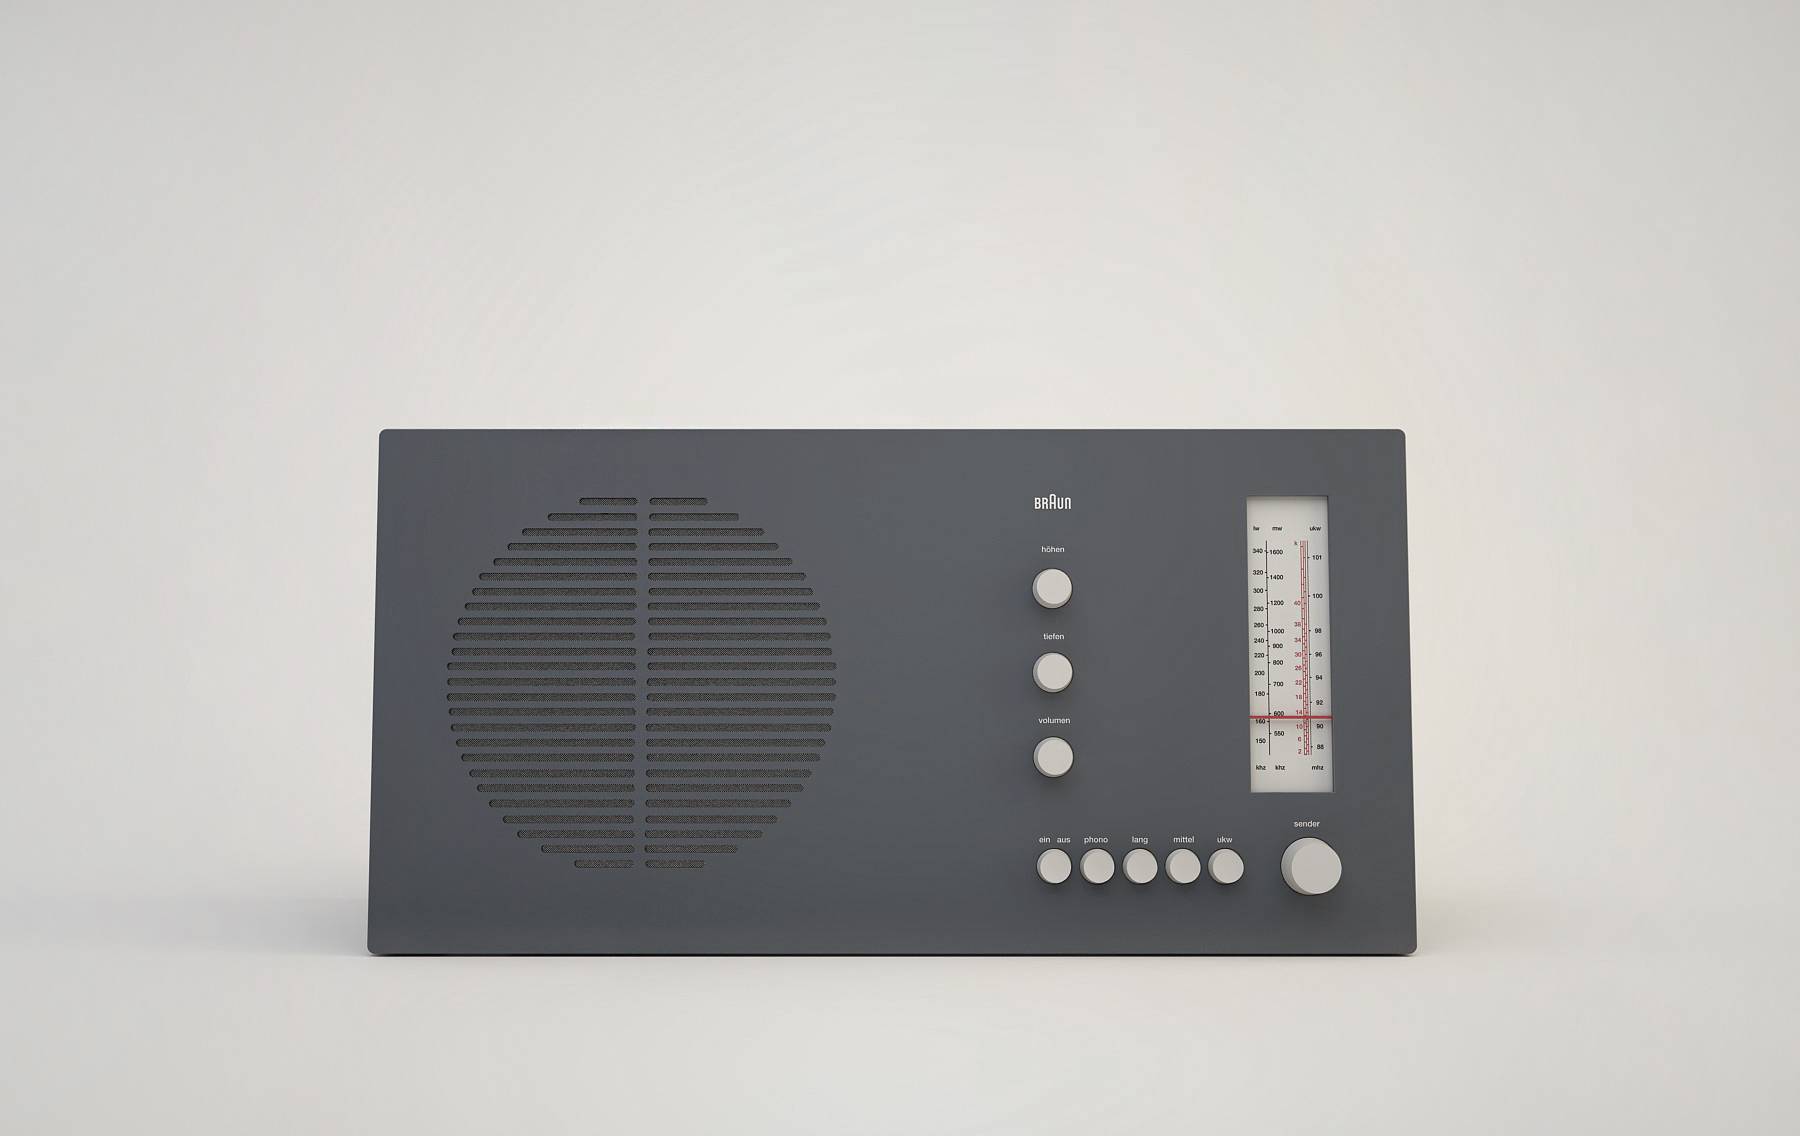 ▲ RT 20 tischsuper radio, designed by Dieter Rams, for Braun, Germany, 1961.